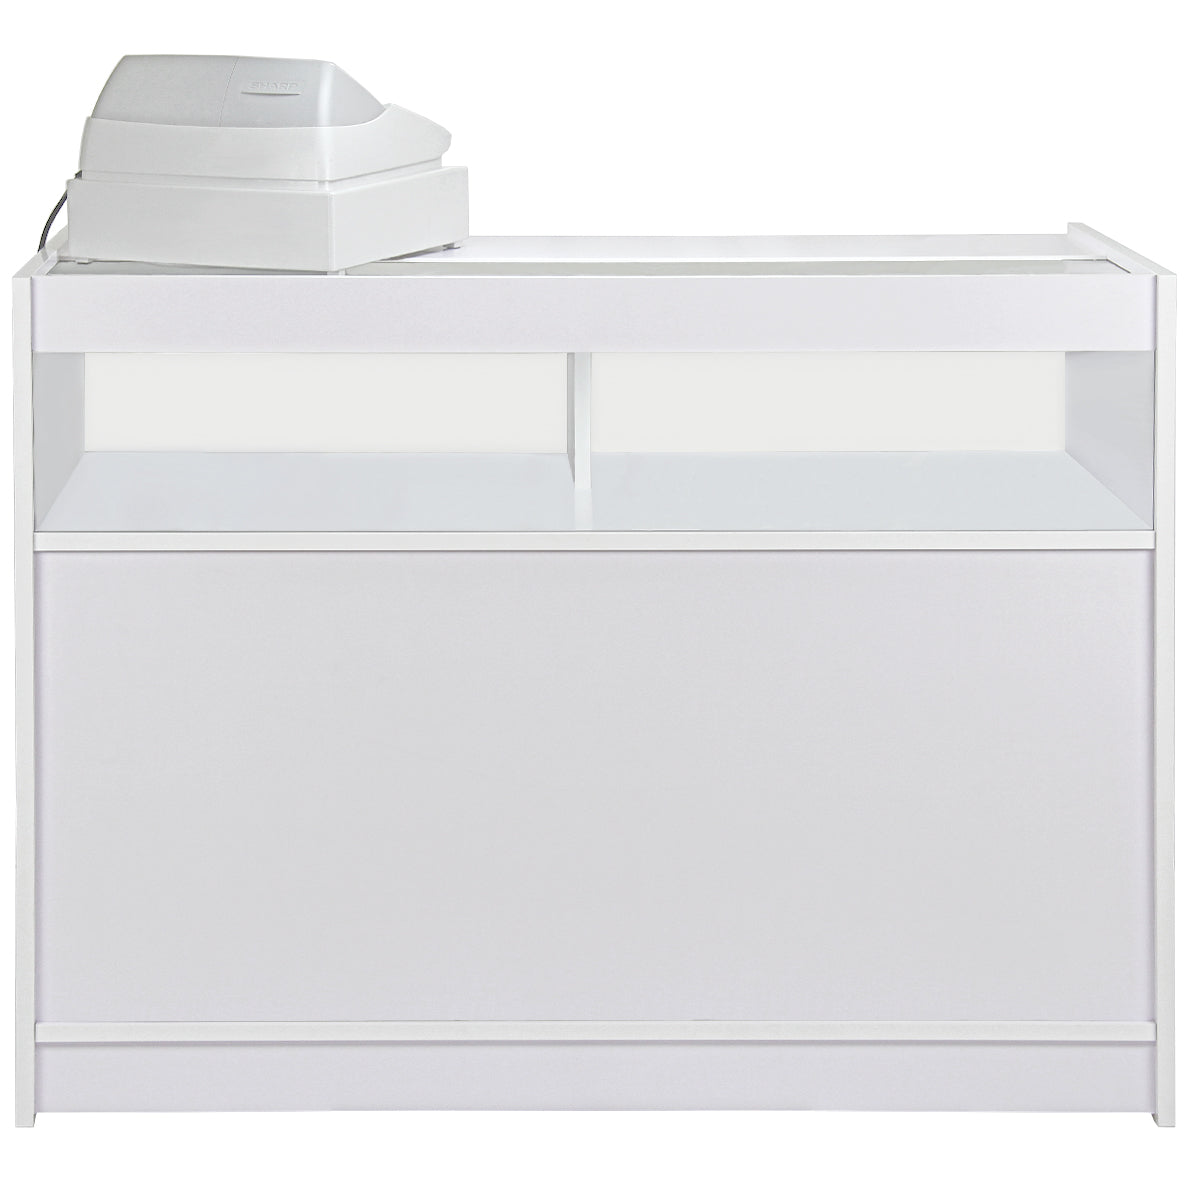 B1200 Retail Shop Counter - Brilliant White